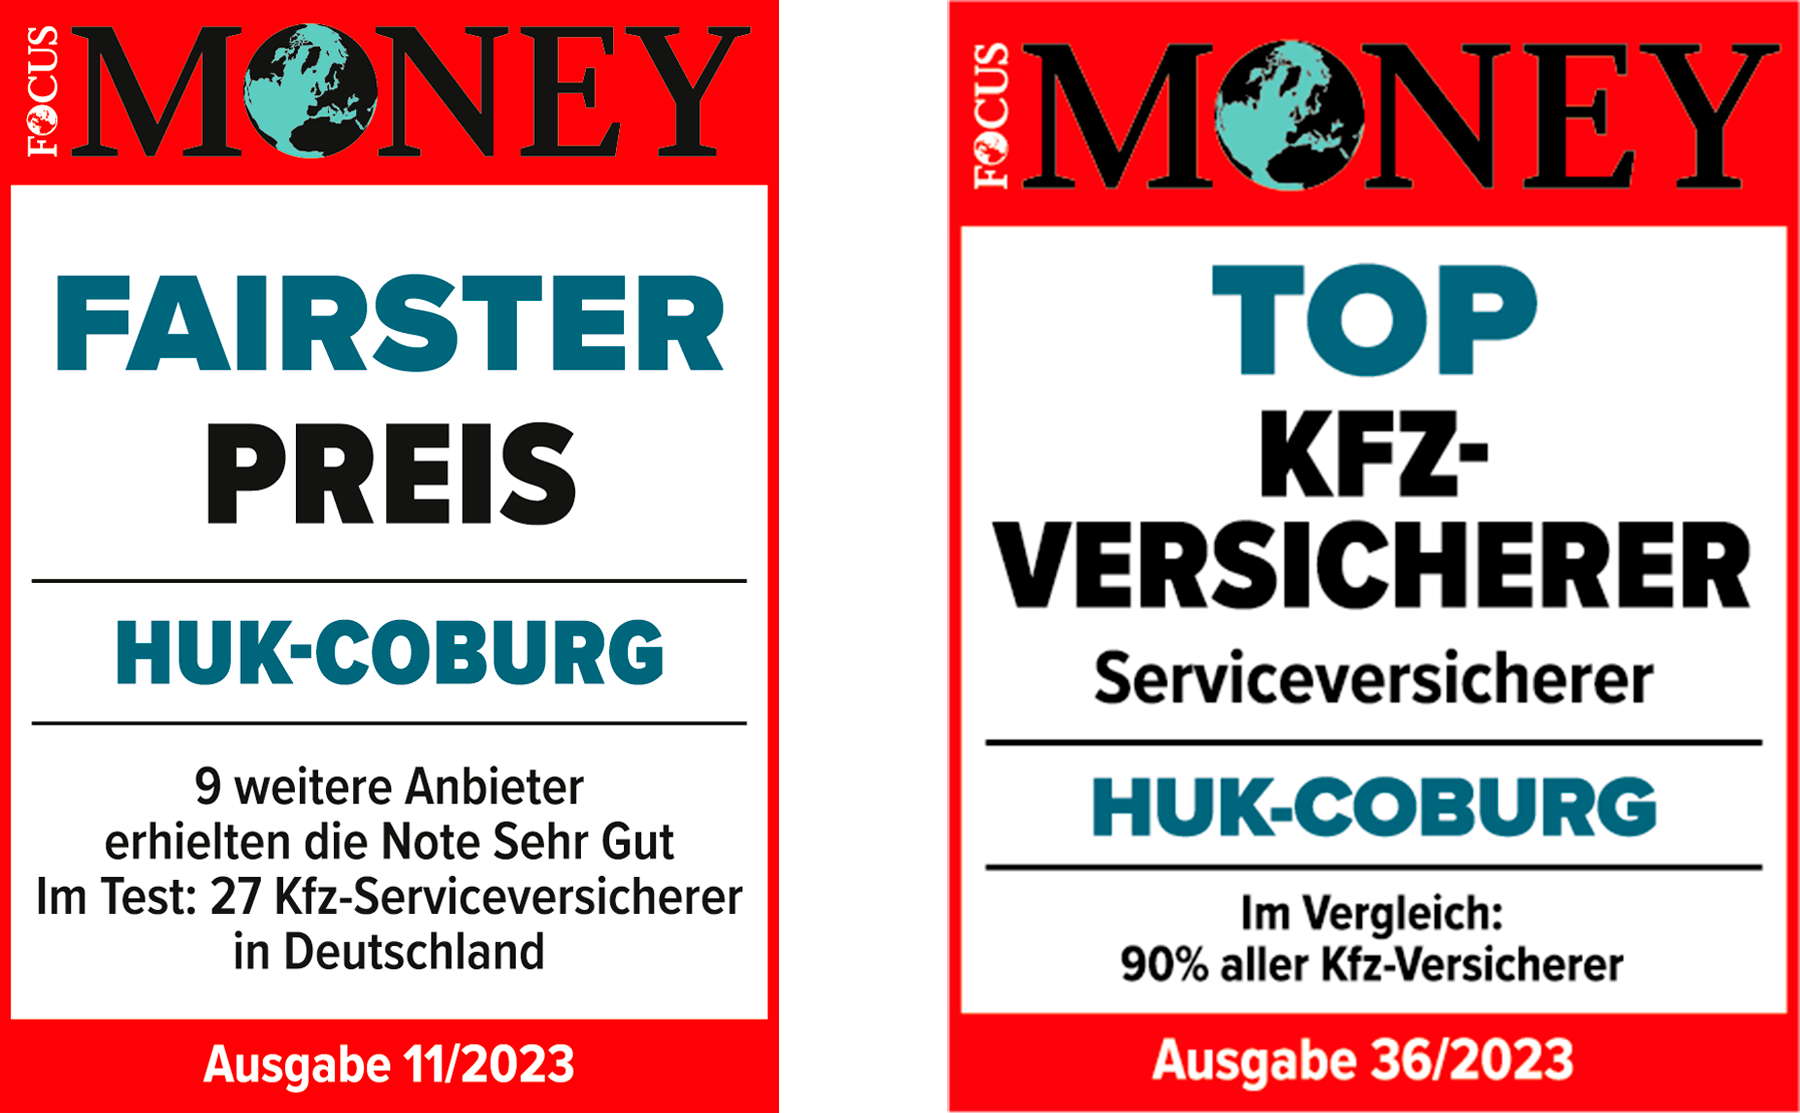 Fairster Preis (Focus Money 11/2023) | Top Kfz-Versicherer (Focus Money 36/2023)